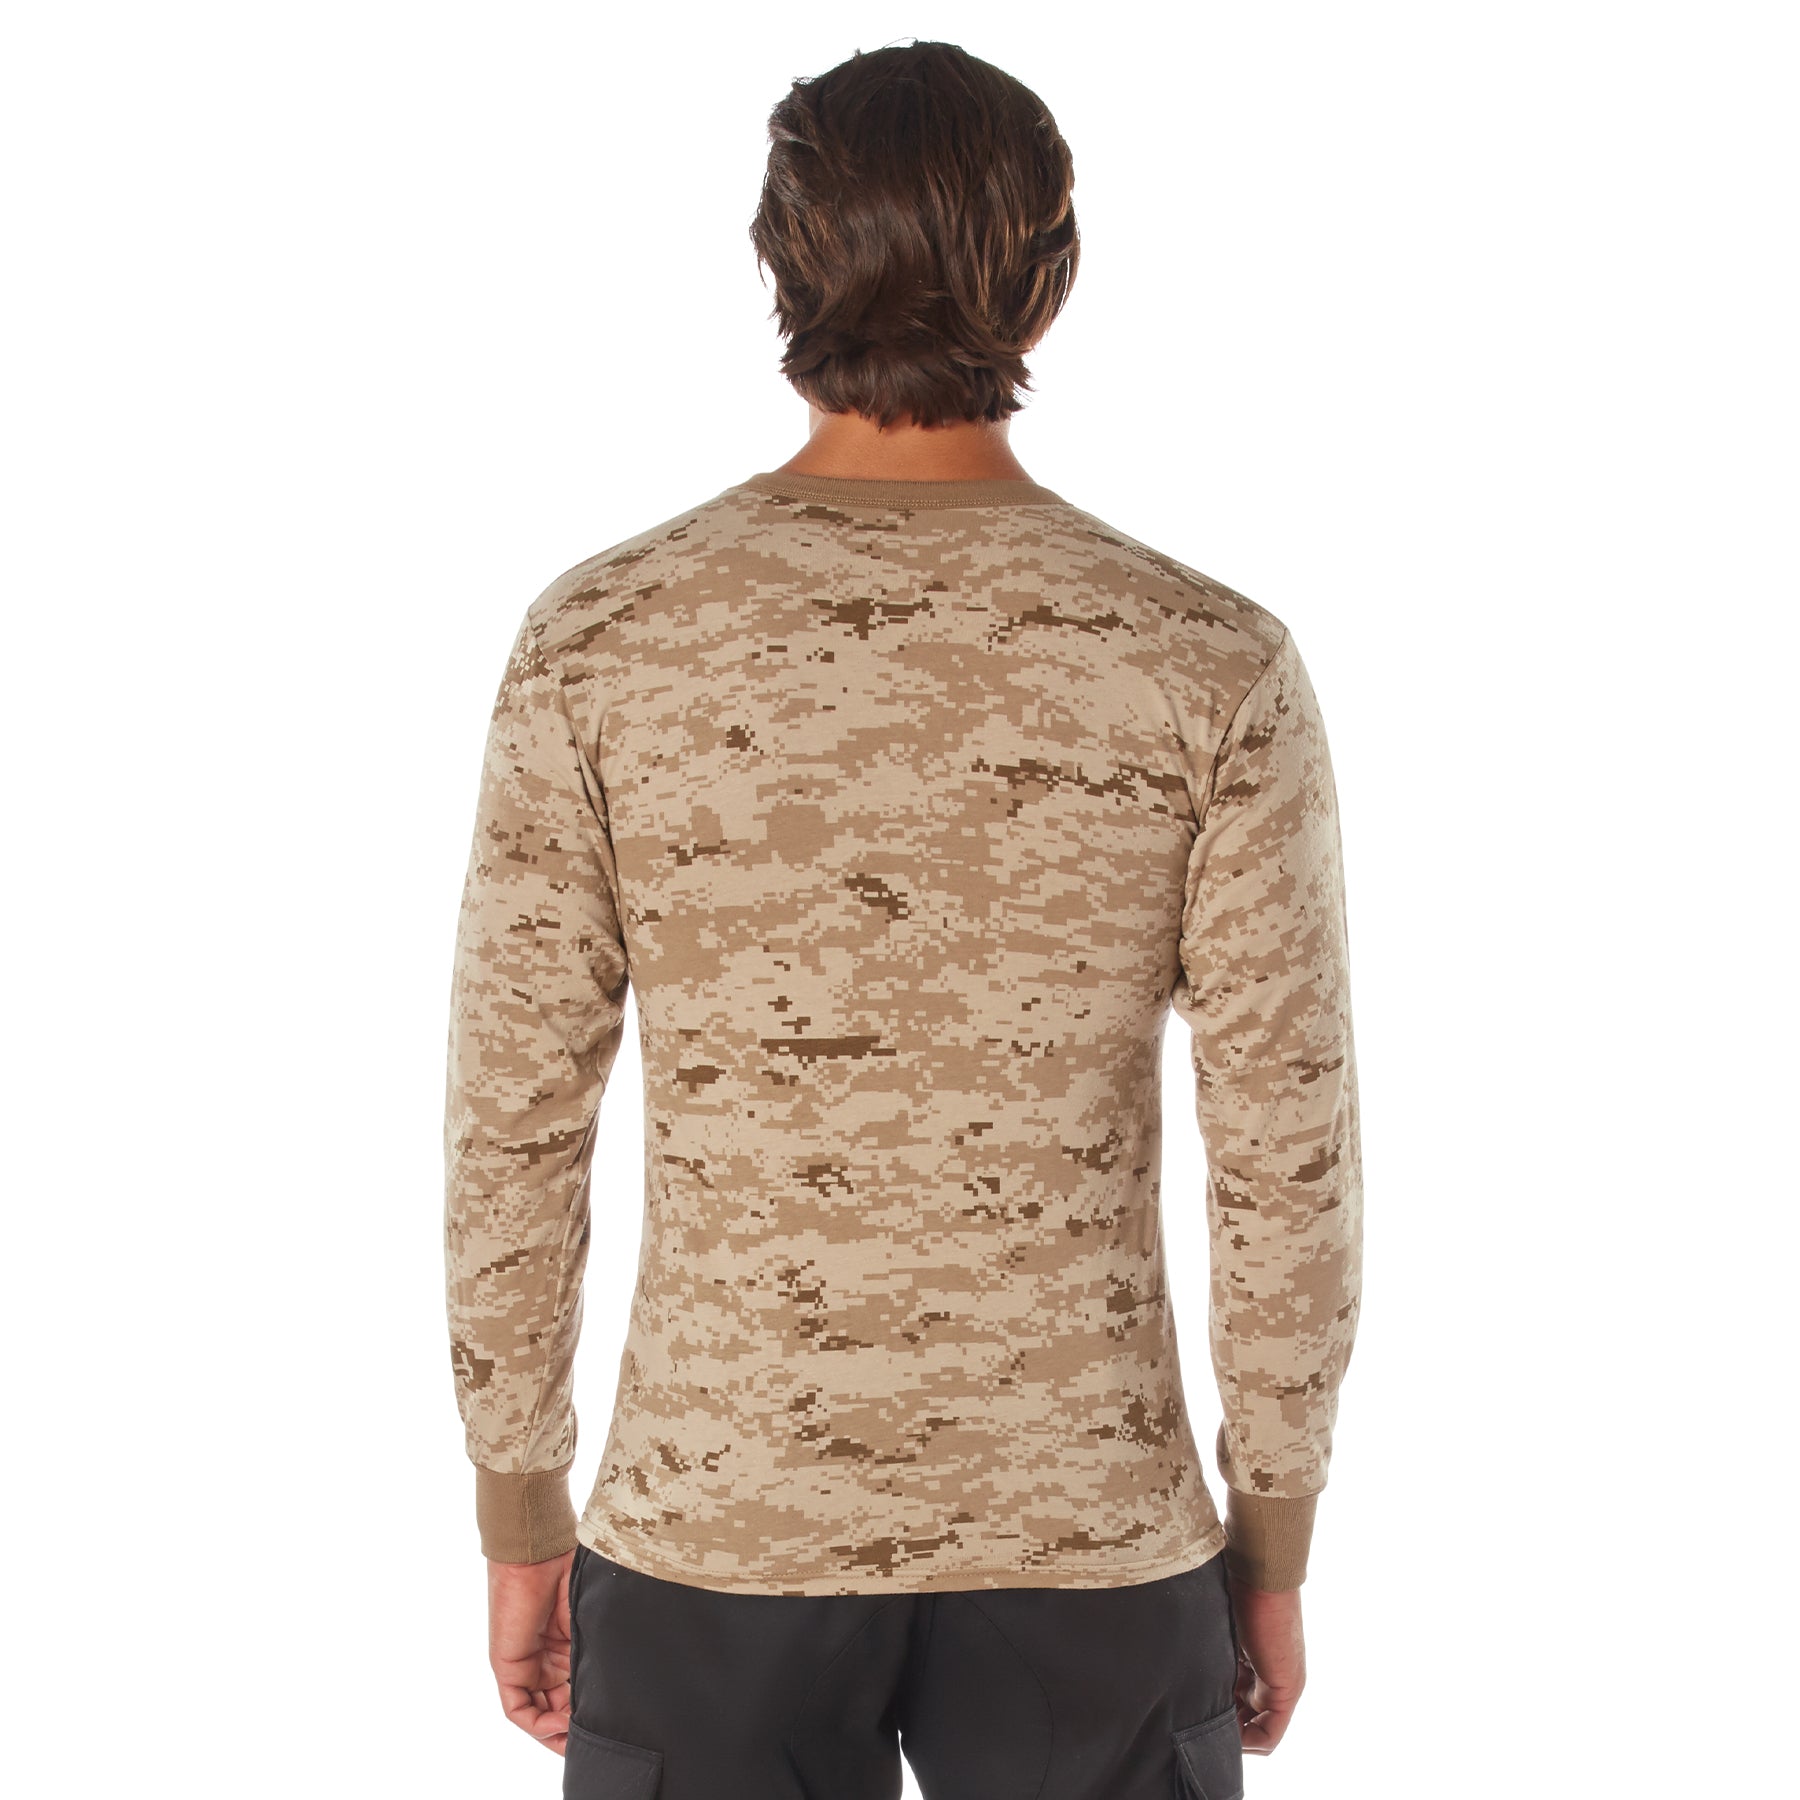 Rothco Long Sleeve Digital Camo T-Shirt - Tactical Choice Plus